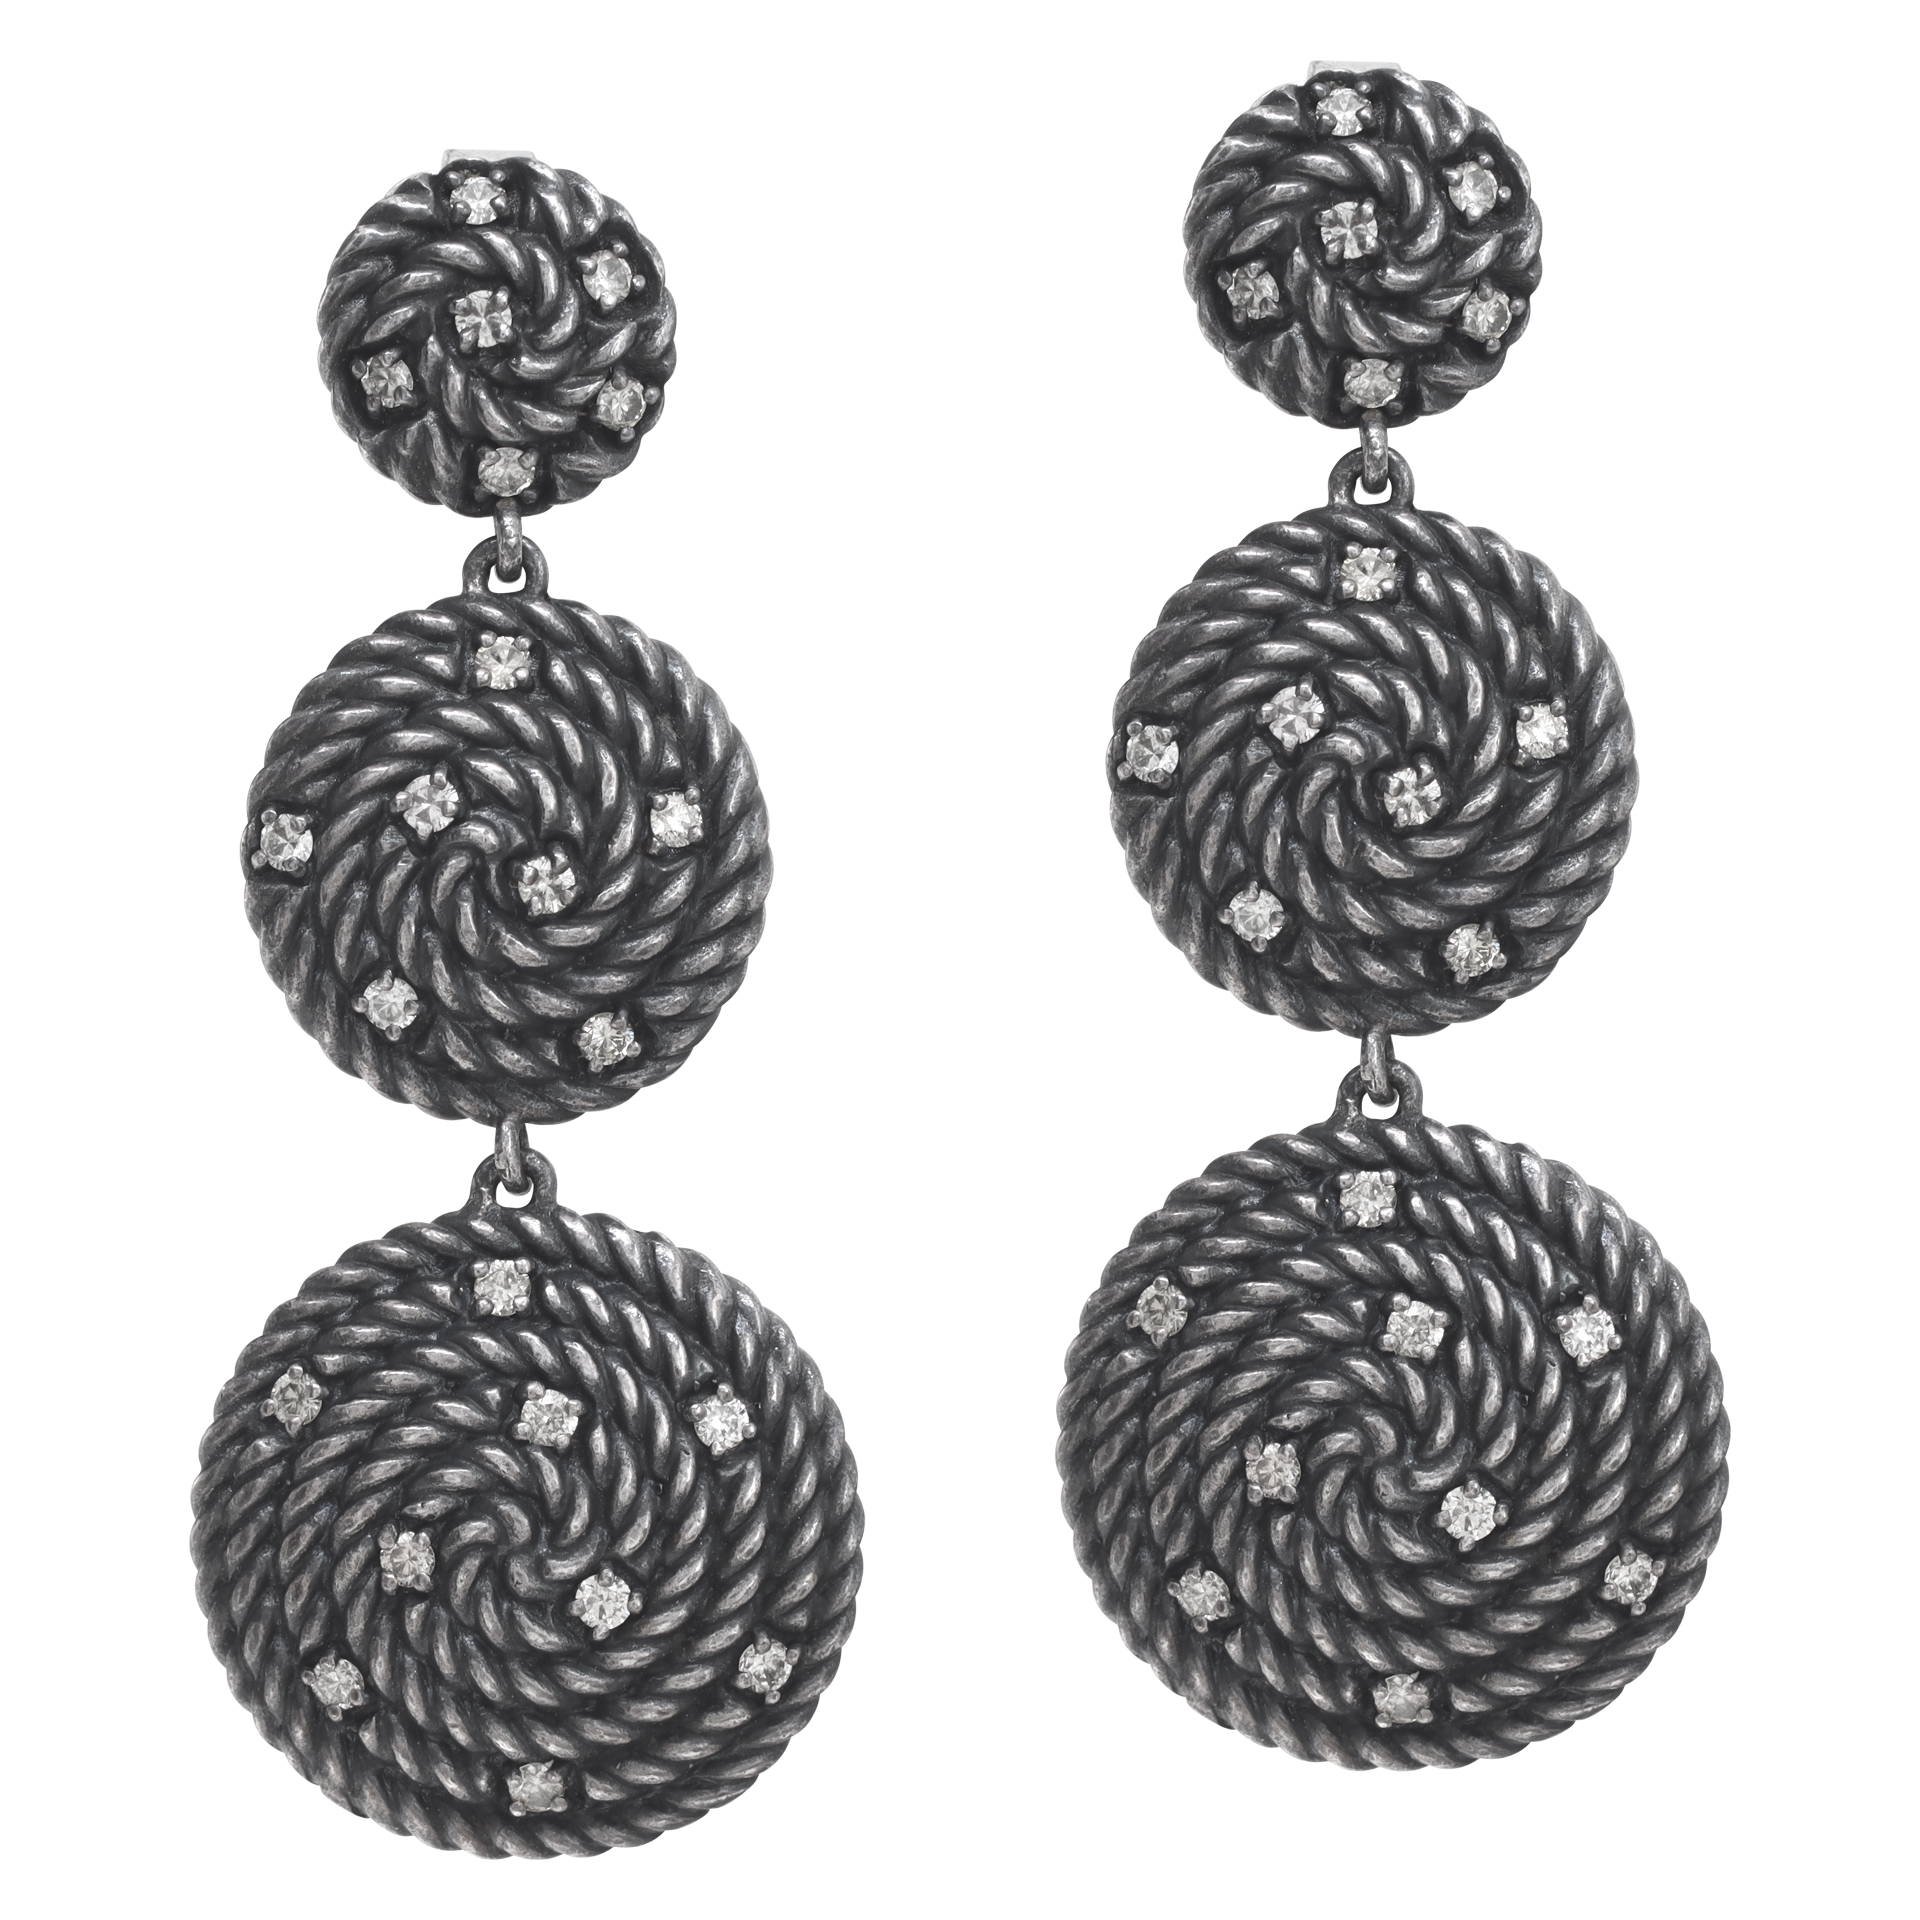 David Yurman coil earrings in sterling silver with diamonds